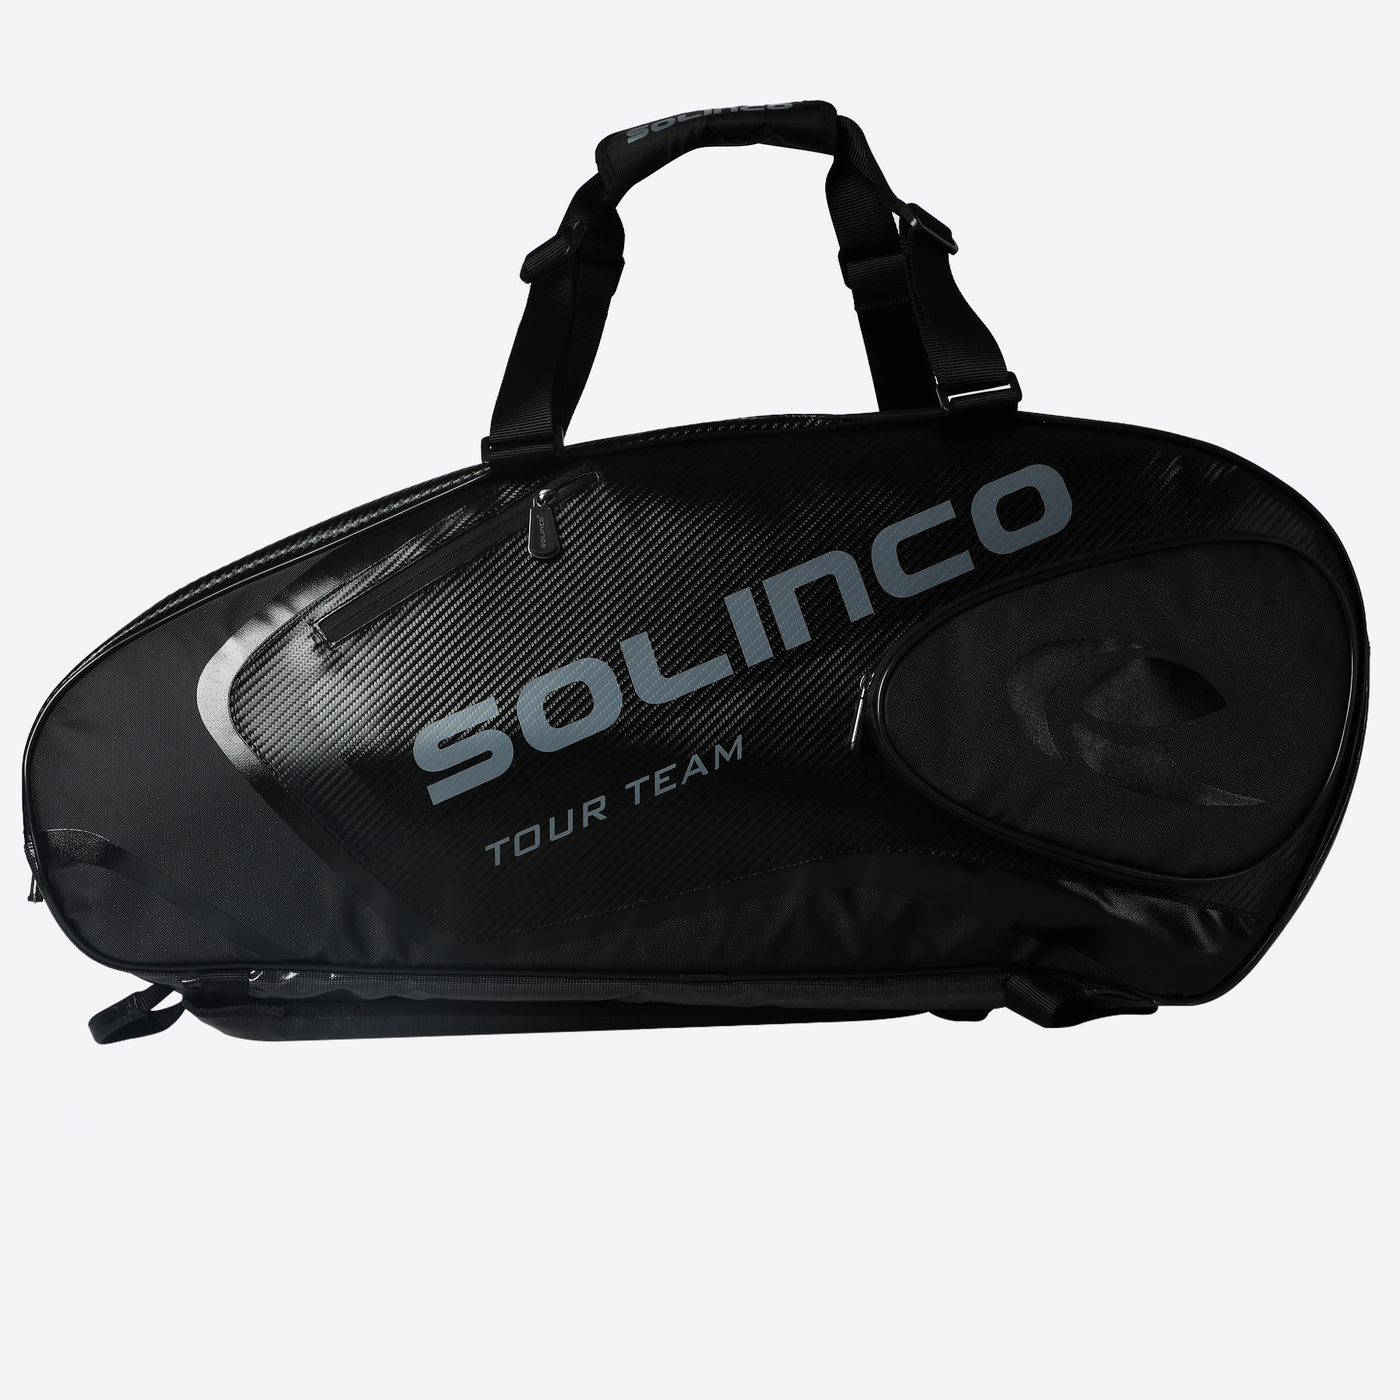 Solinco Tour Tennistaske